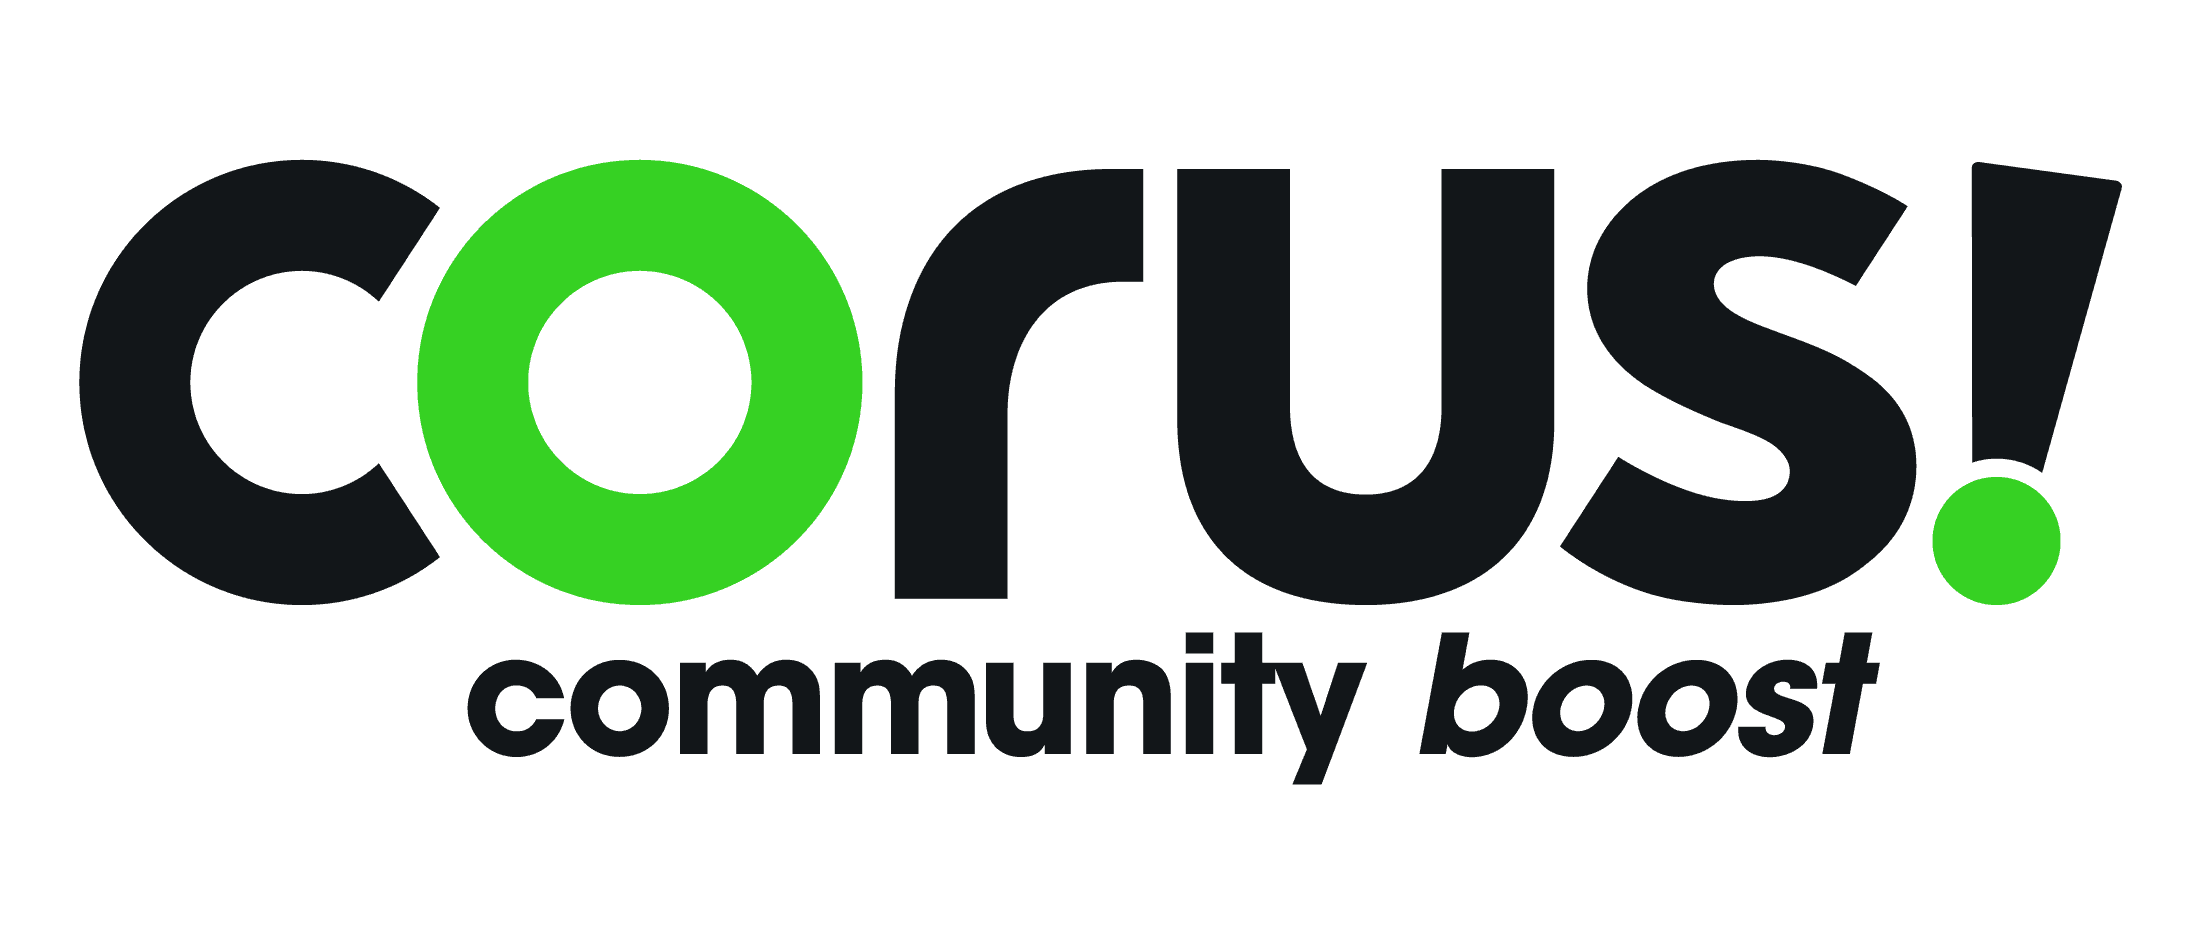 Corus community boost logo